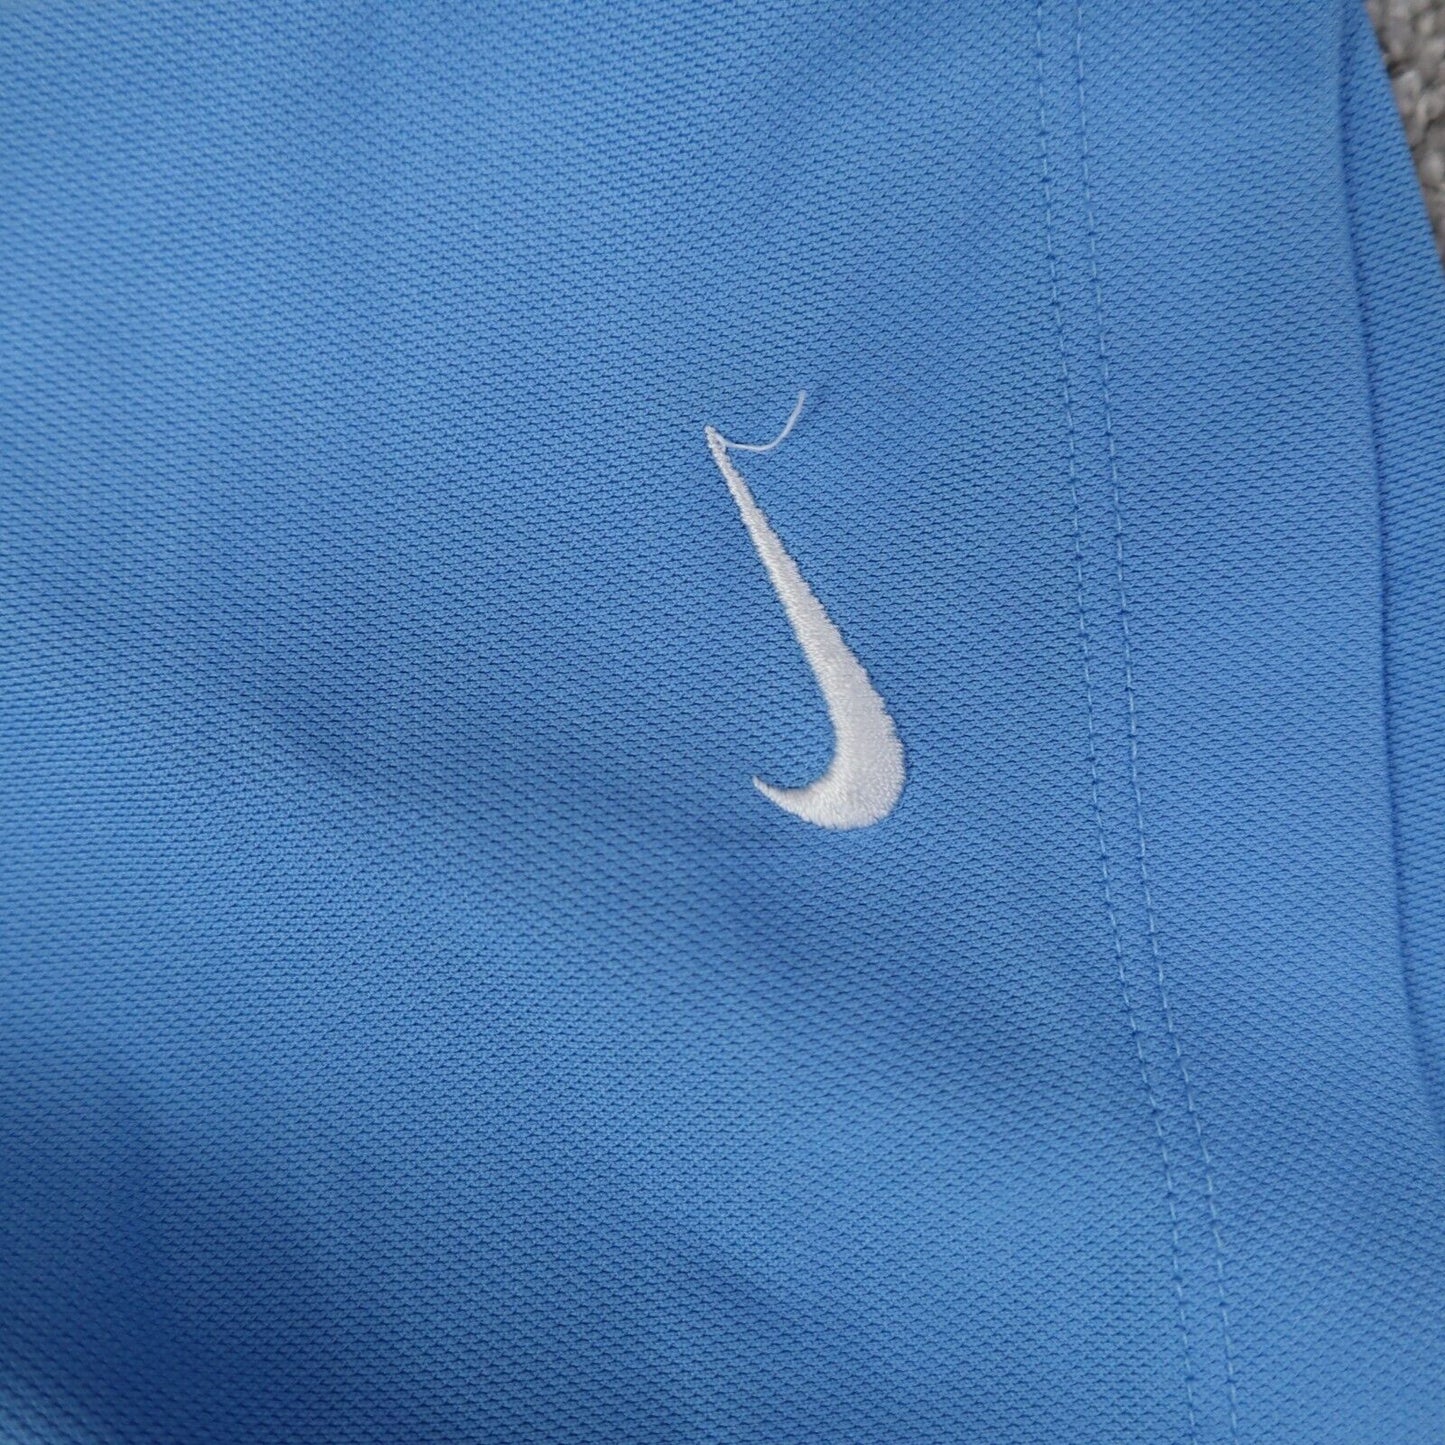 Nike Dri Fit Golf Shirt Men's X-Large Blue Short Sleeves Sports Logo Polo Shirt